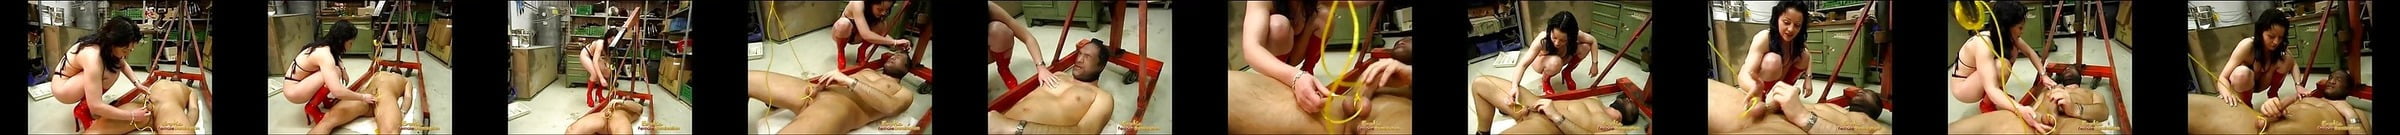 Cbt Slave Gets Cock Torture To Test His Limits Hd Porn 00 Jp